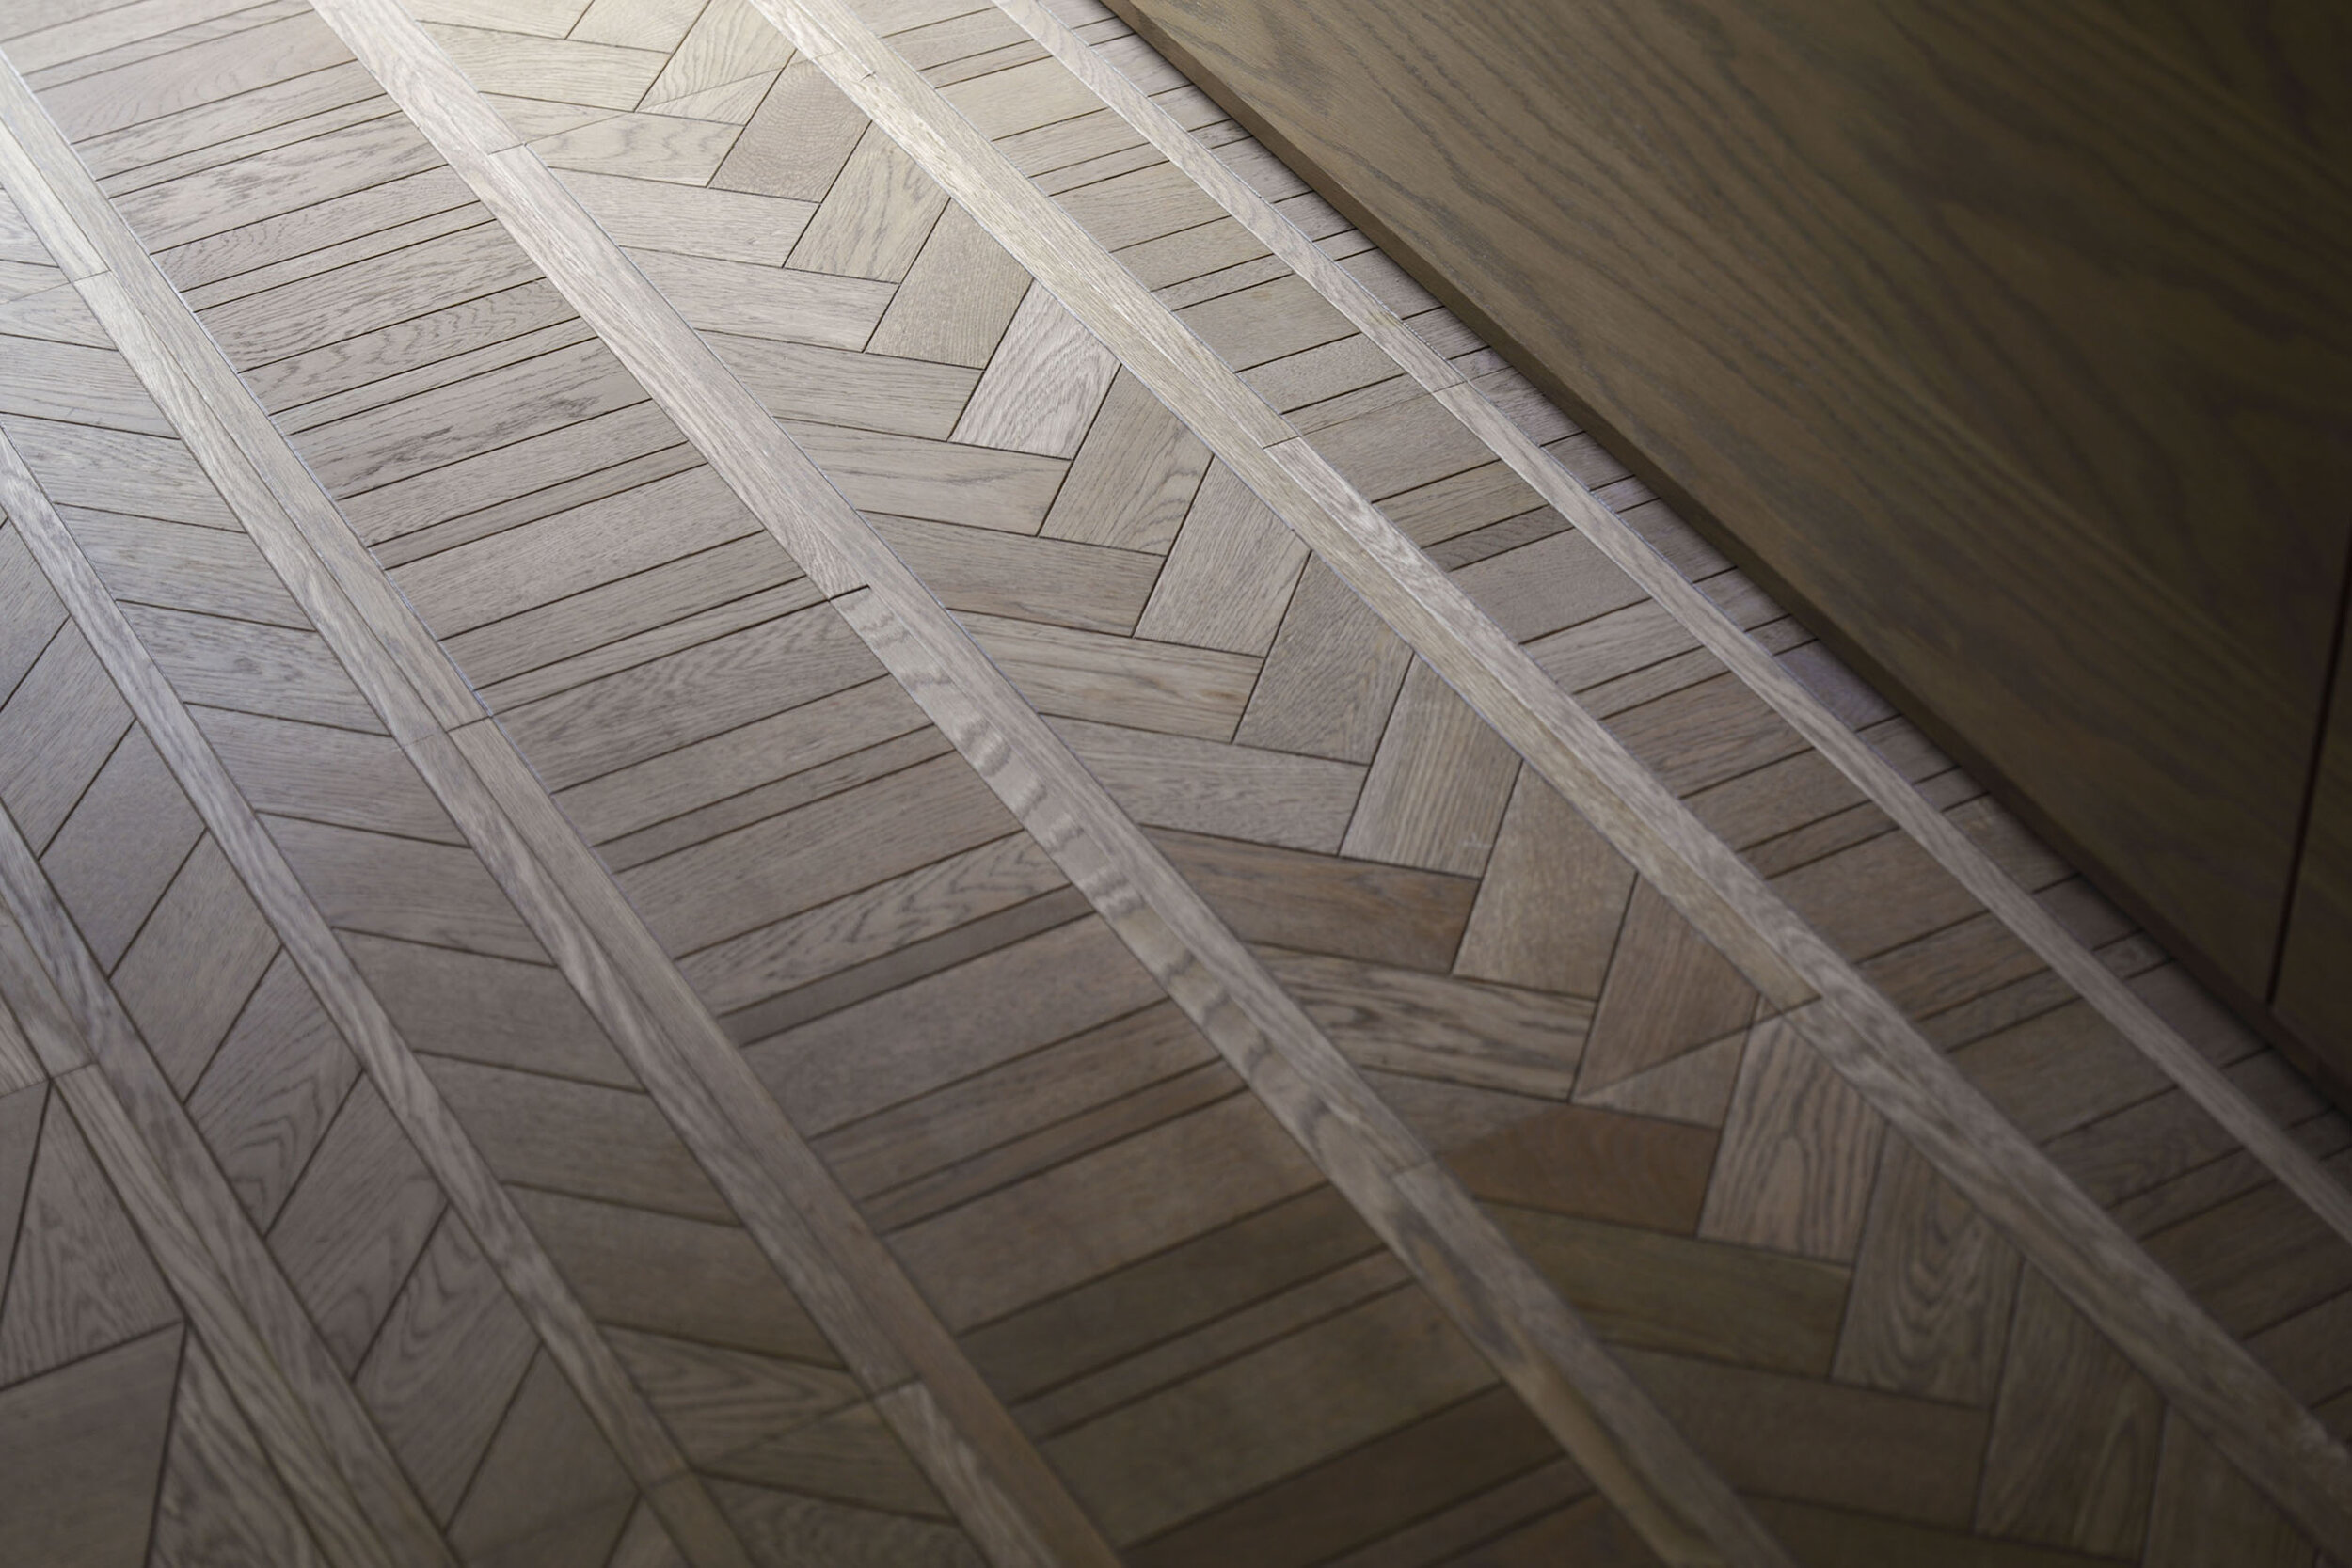  a floor detail of Hanada Gallery Ginza designed by Ryohei Kanda / Roito 